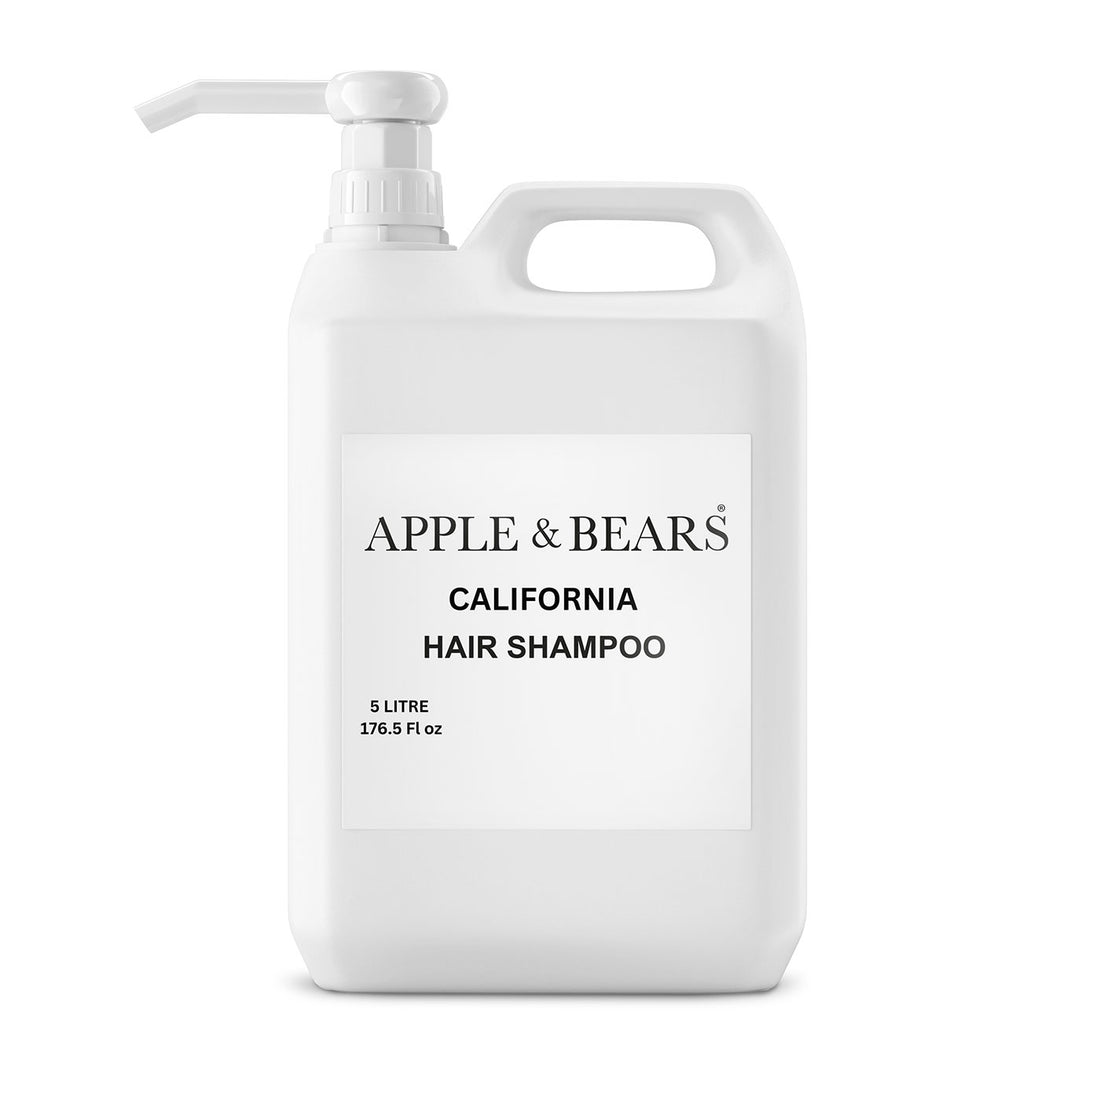 California Shampoo Refill 5 litre /176.5 fl oz